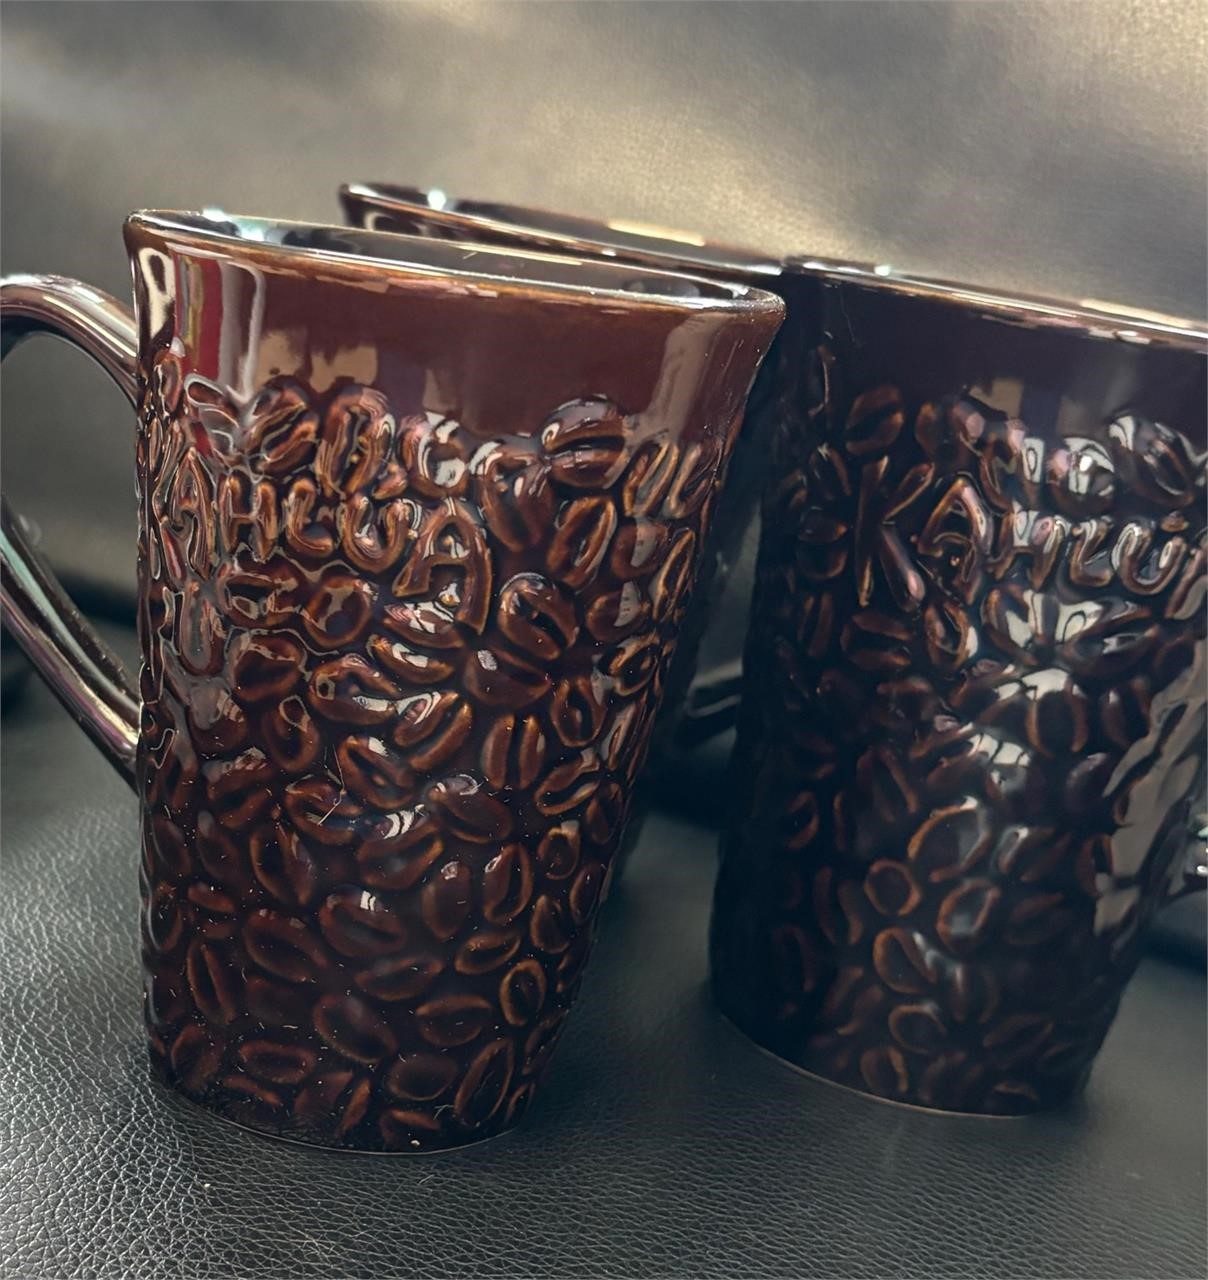 3 Kalhua vintage antique collectible mugs